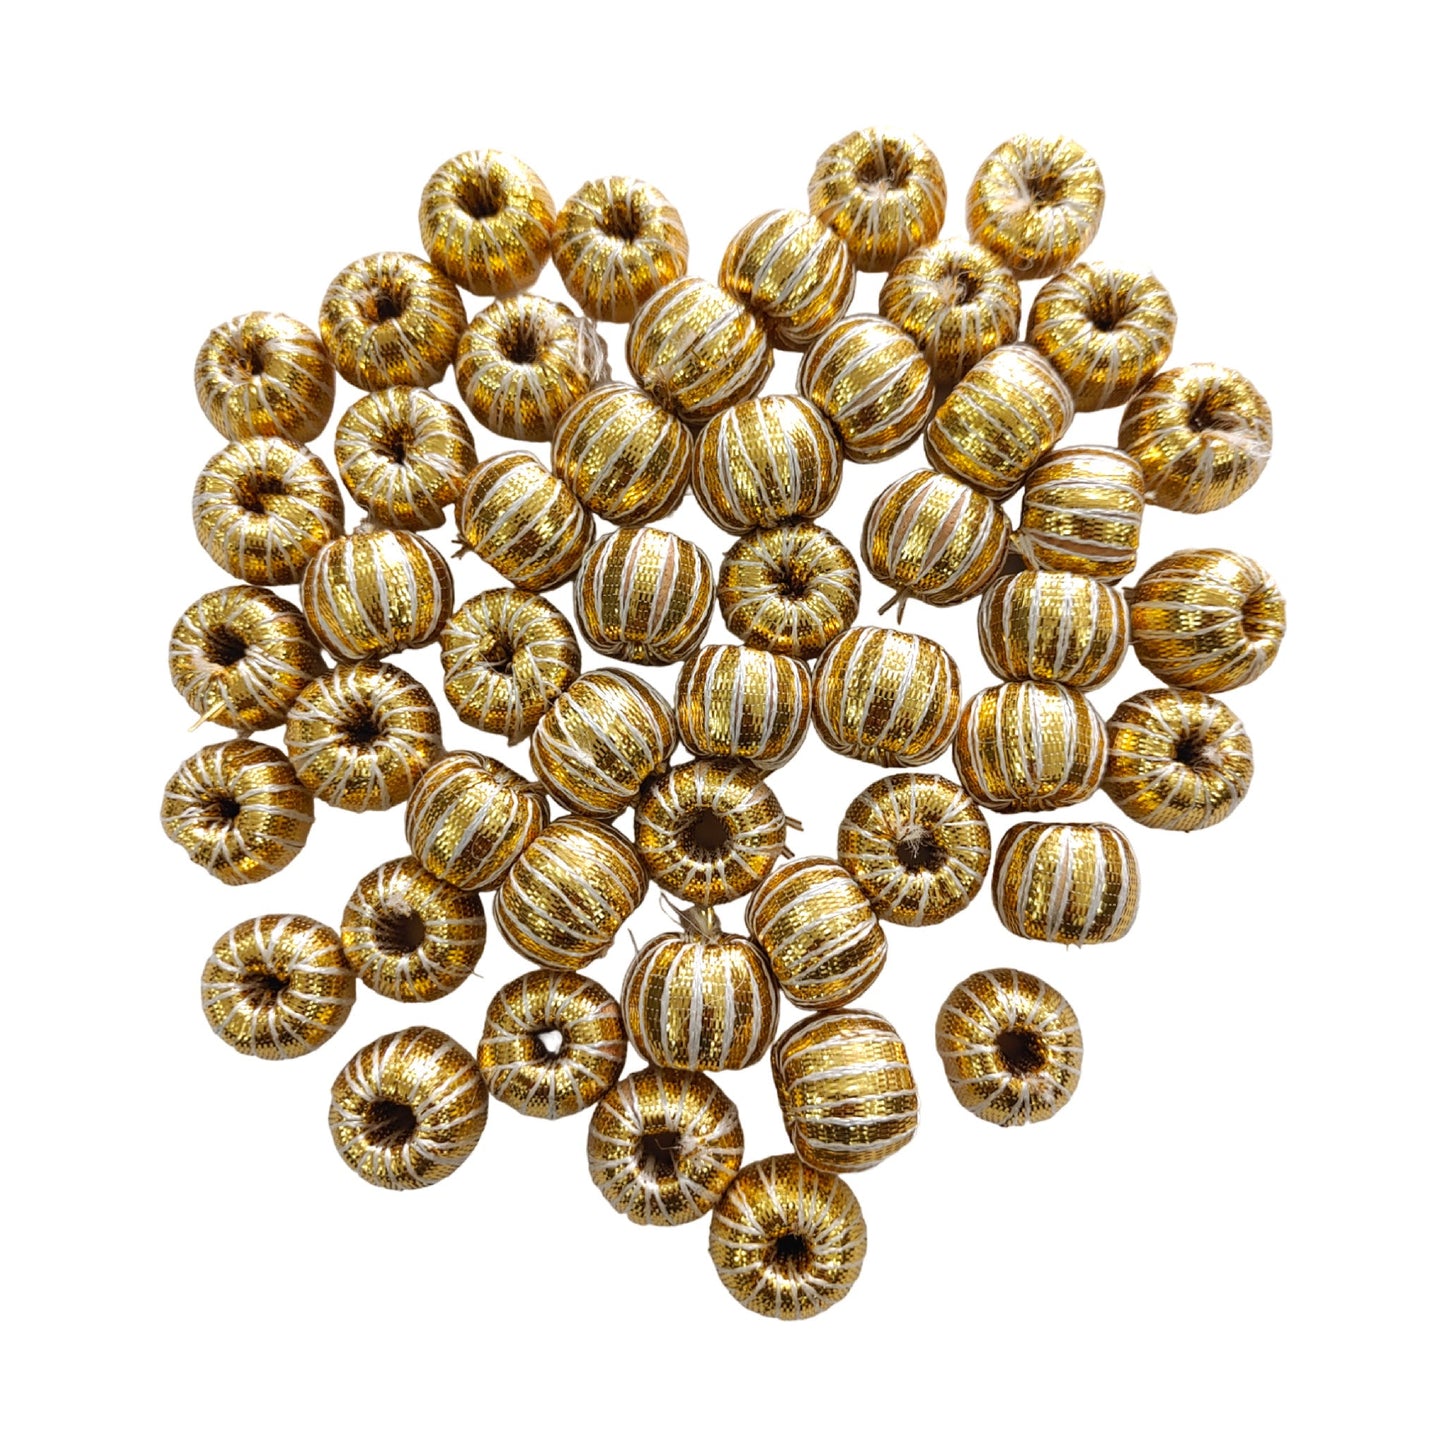 Indian Petals Gota Ball Motif for Rakhi, Jewelry making, Craft or Decor